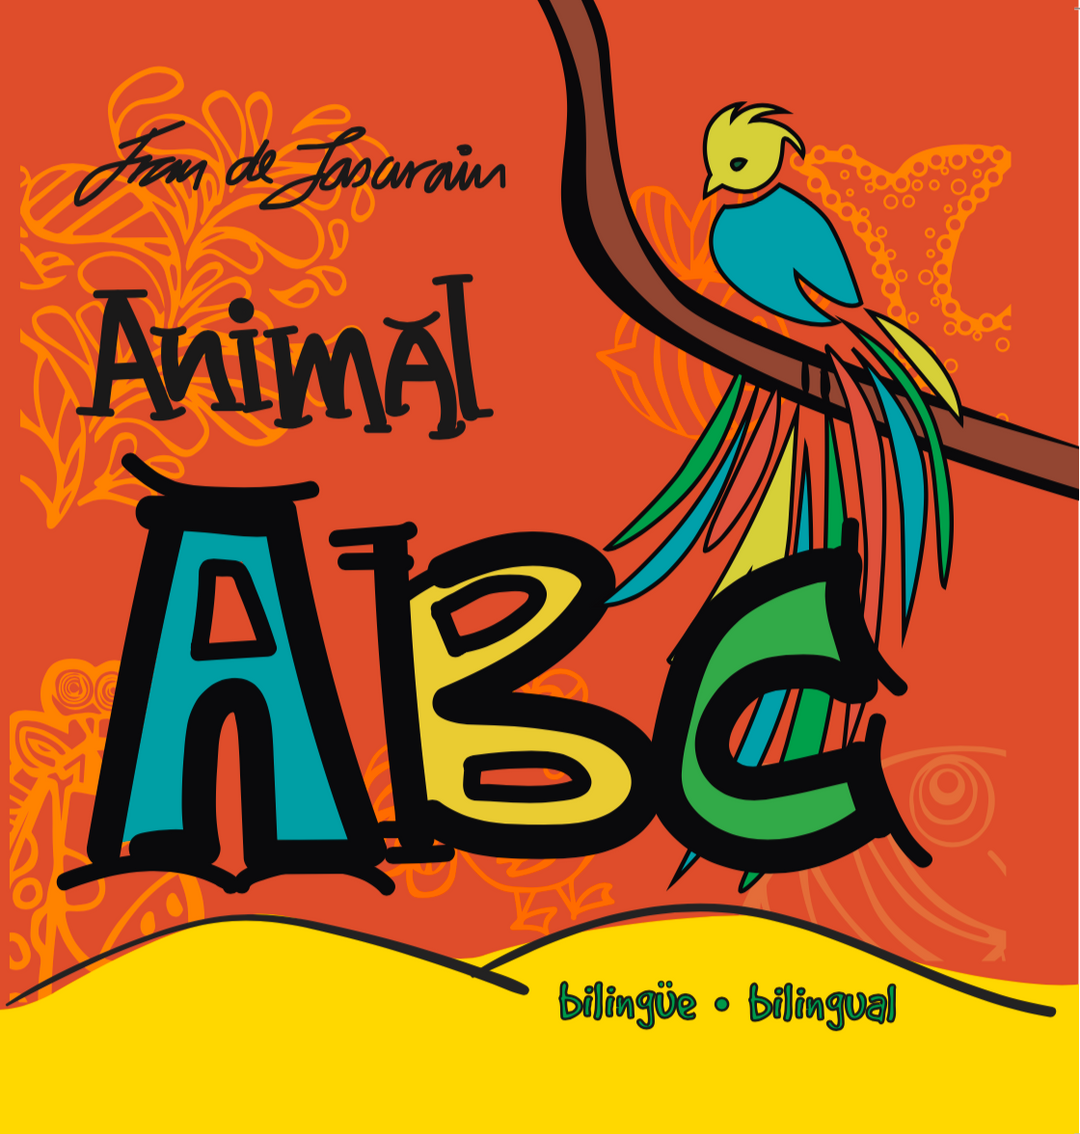 ANIMAL ABC BOOK BILINGUAL - SOFT COVER